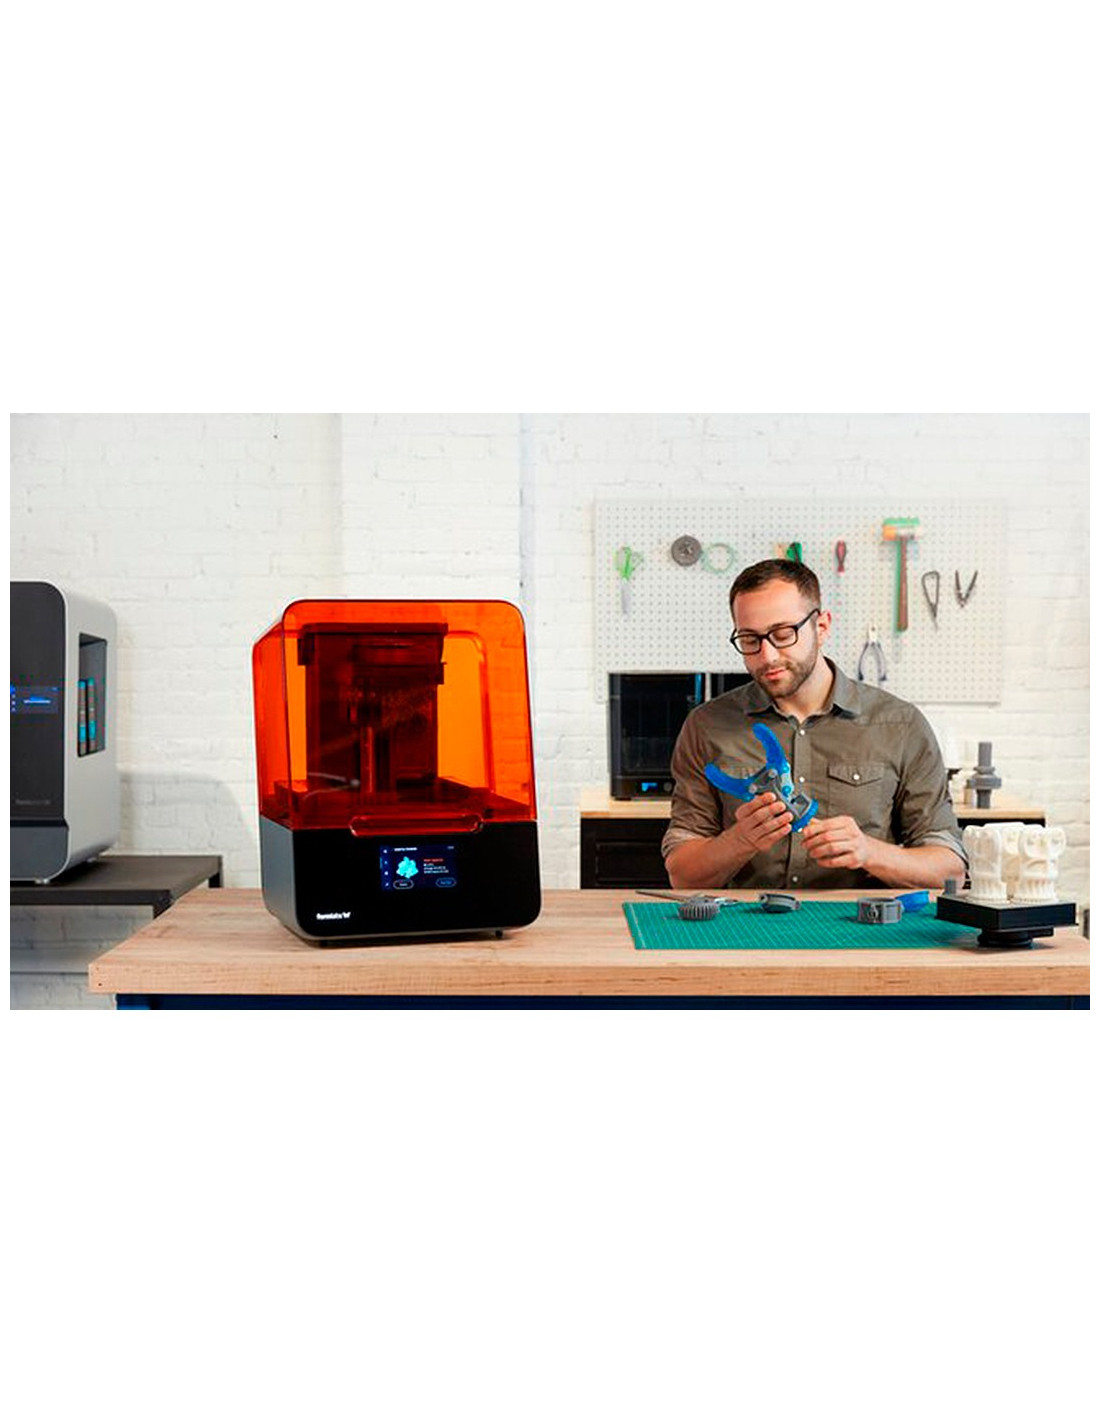 Impressora 3D FormLabs Form 3 - pacote básico